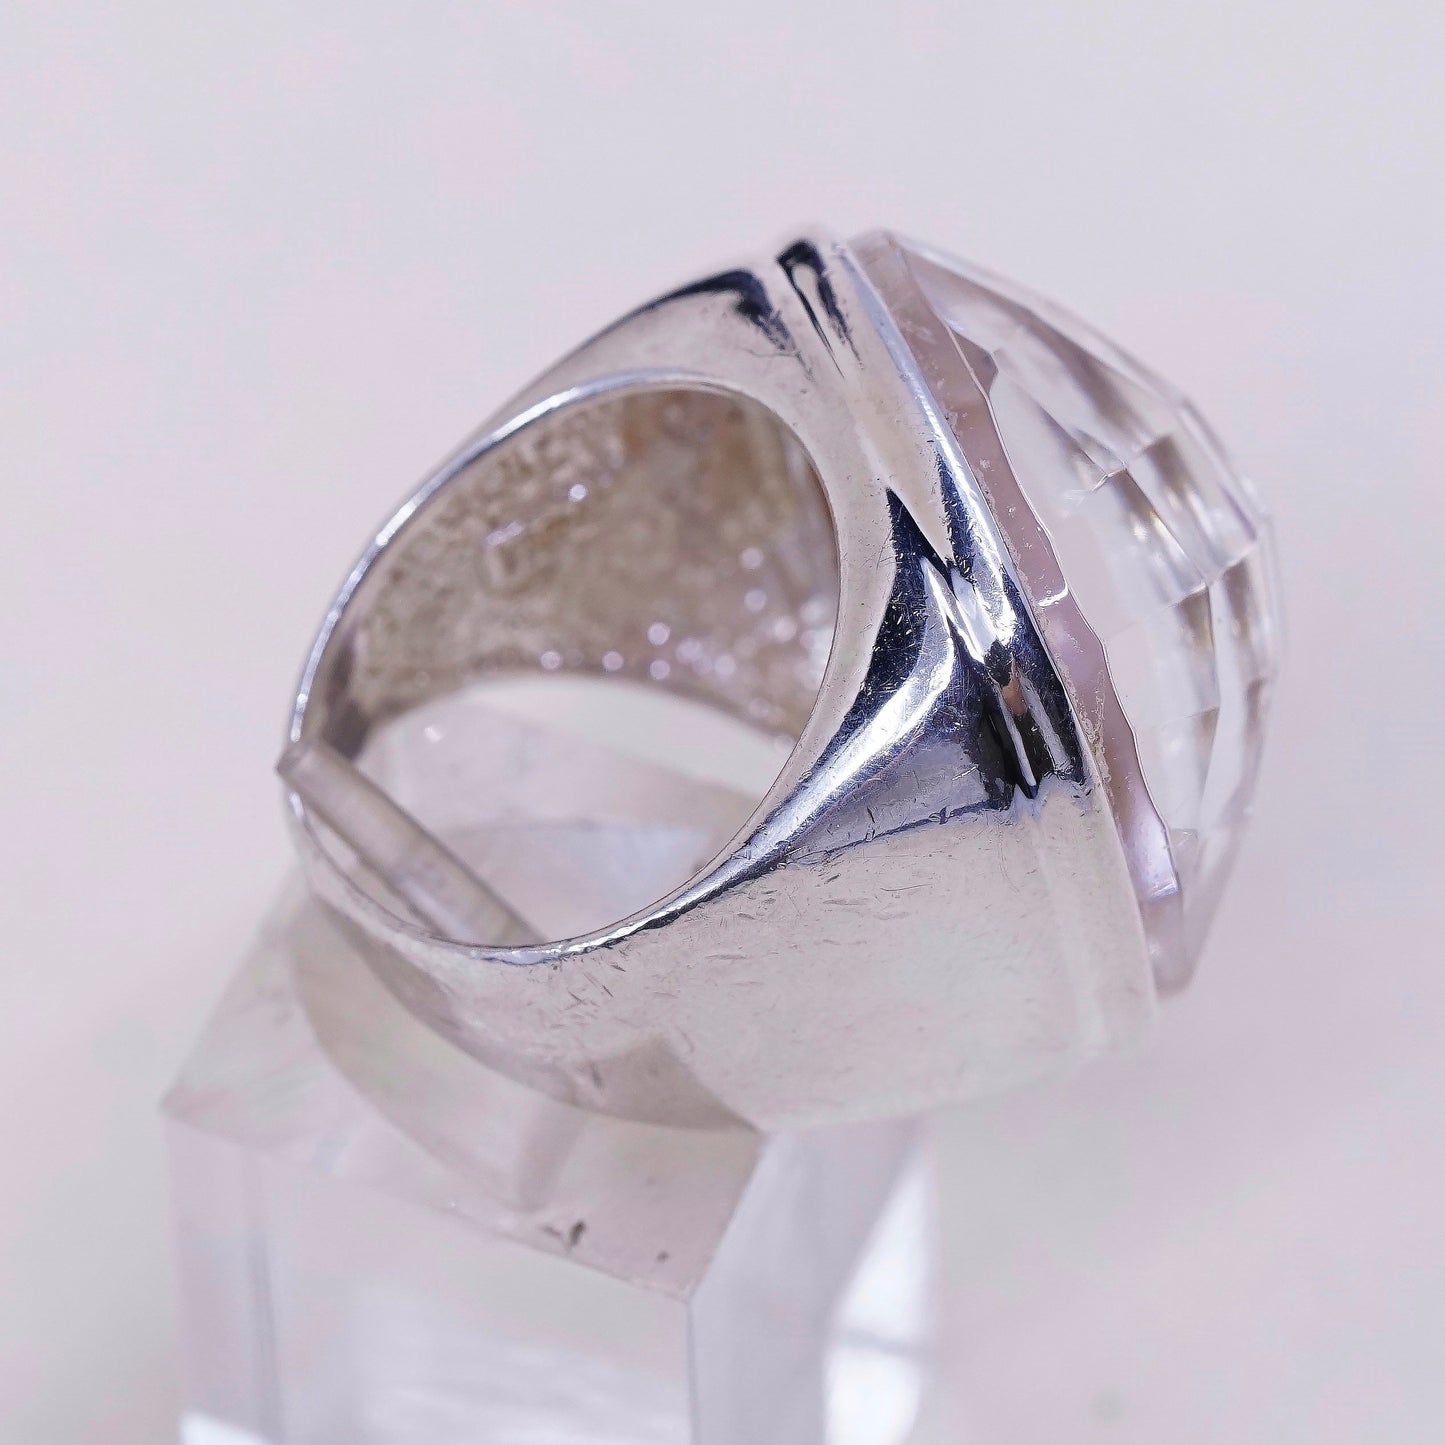 sz 7, vtg sterling 925 silver handmade statement ring w/ pink glass stone